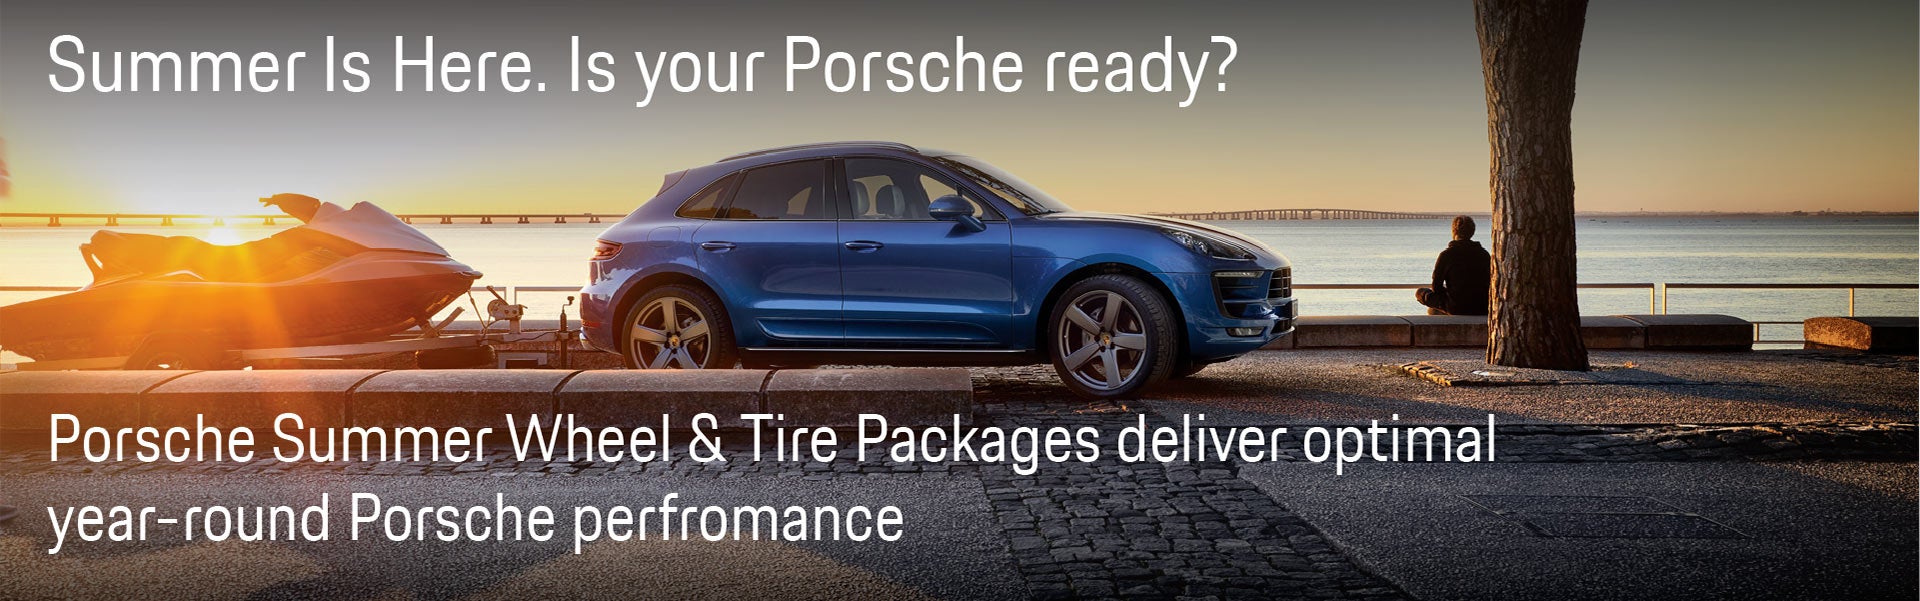 Porsche Summer Wheel and Tire Packages